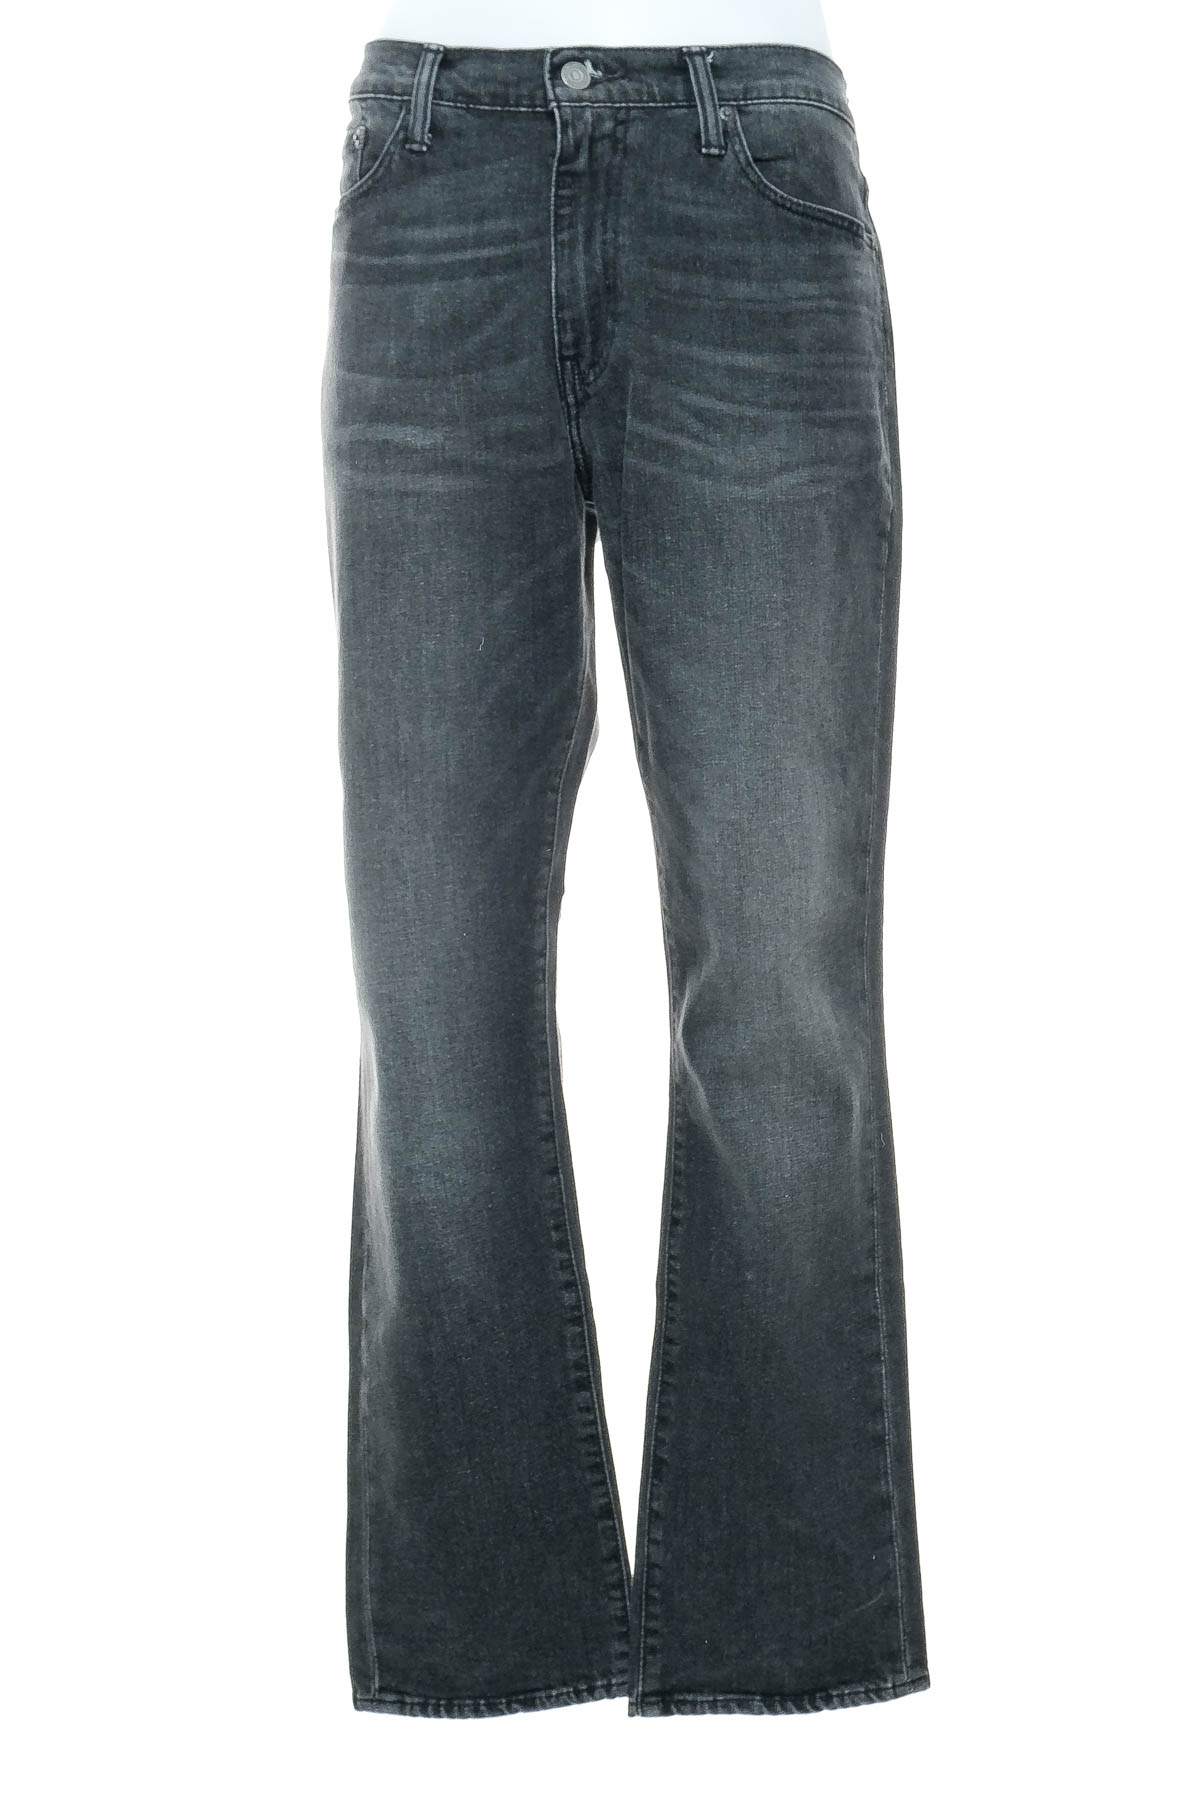 Men's jeans - Levi Strauss & Co. - 0